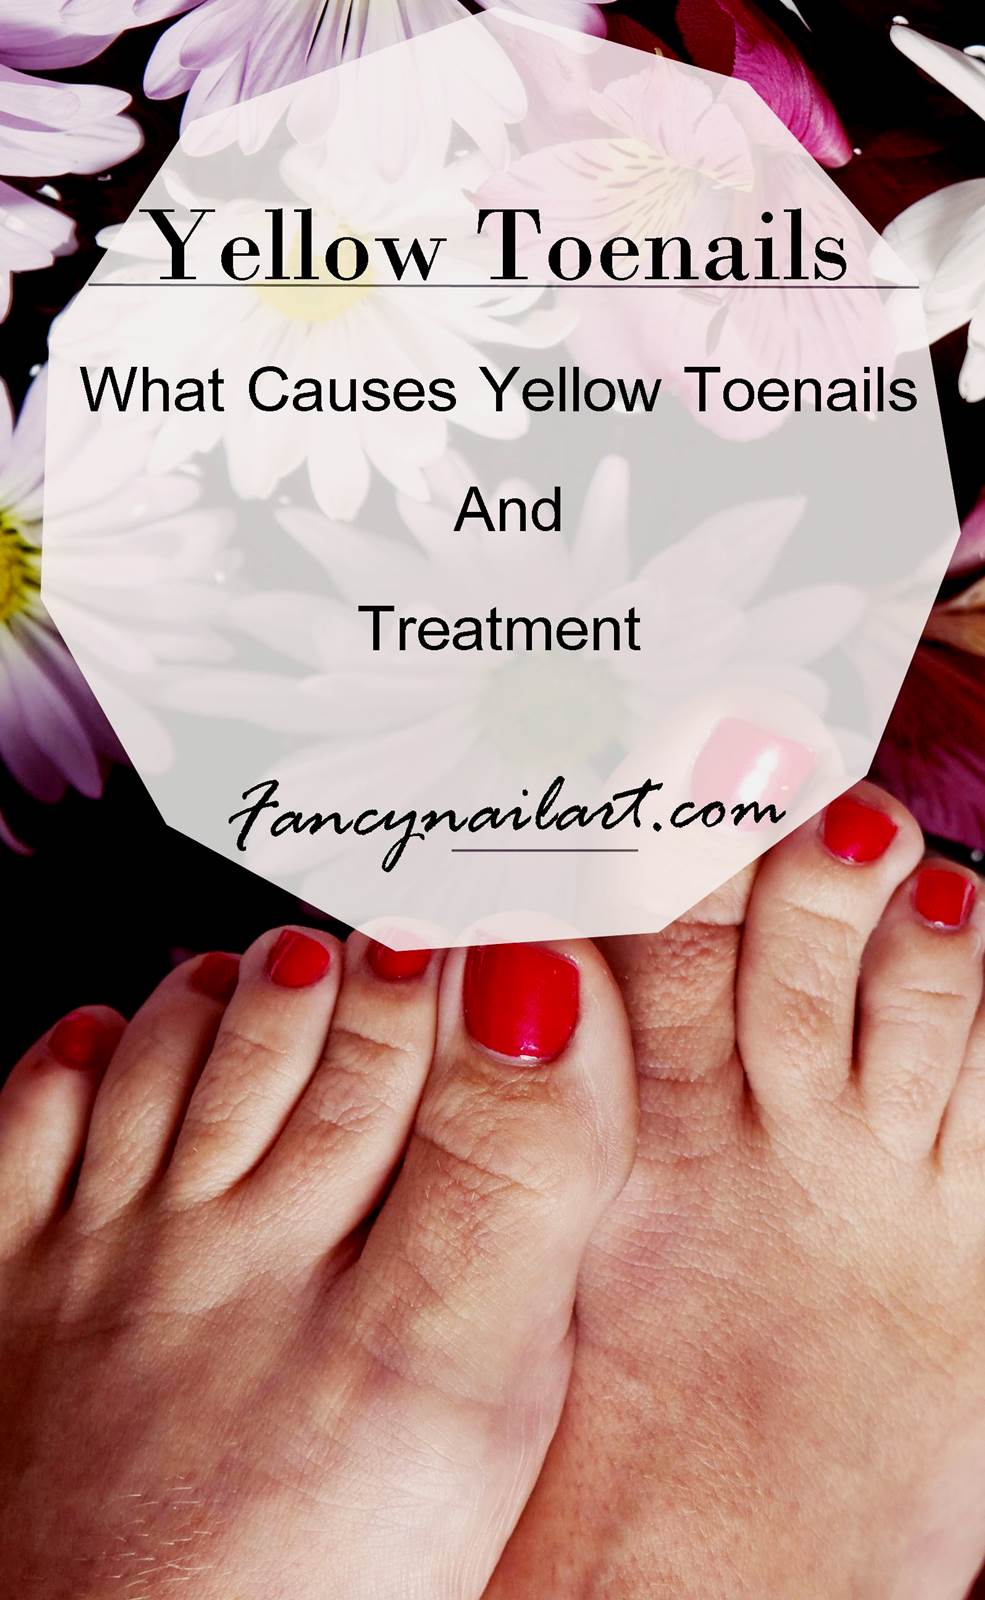 Yellow Toenails -What Causes Yellow Toenails And Treatment